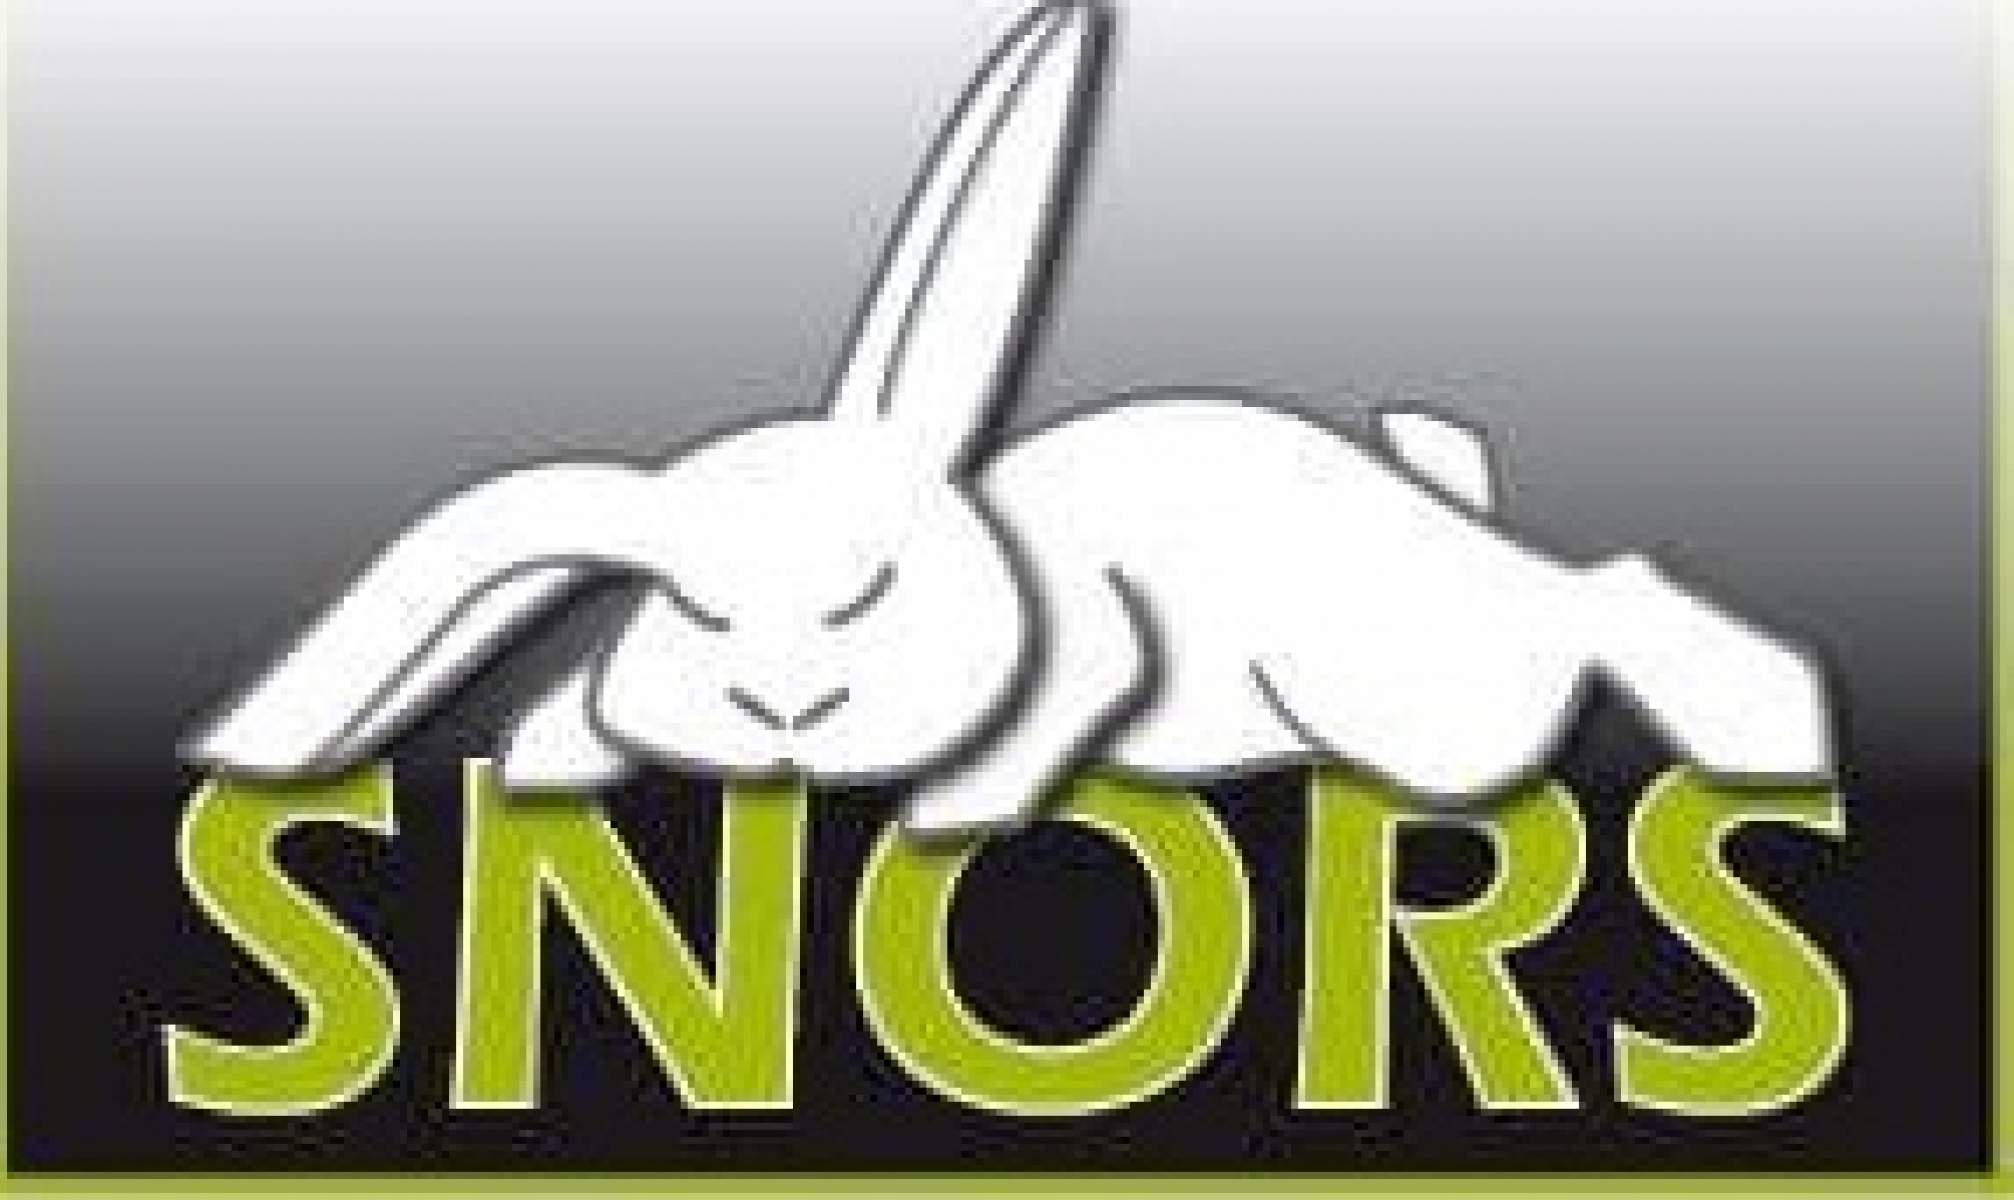 Special Needs Older Rabbits Sanctuary eCards